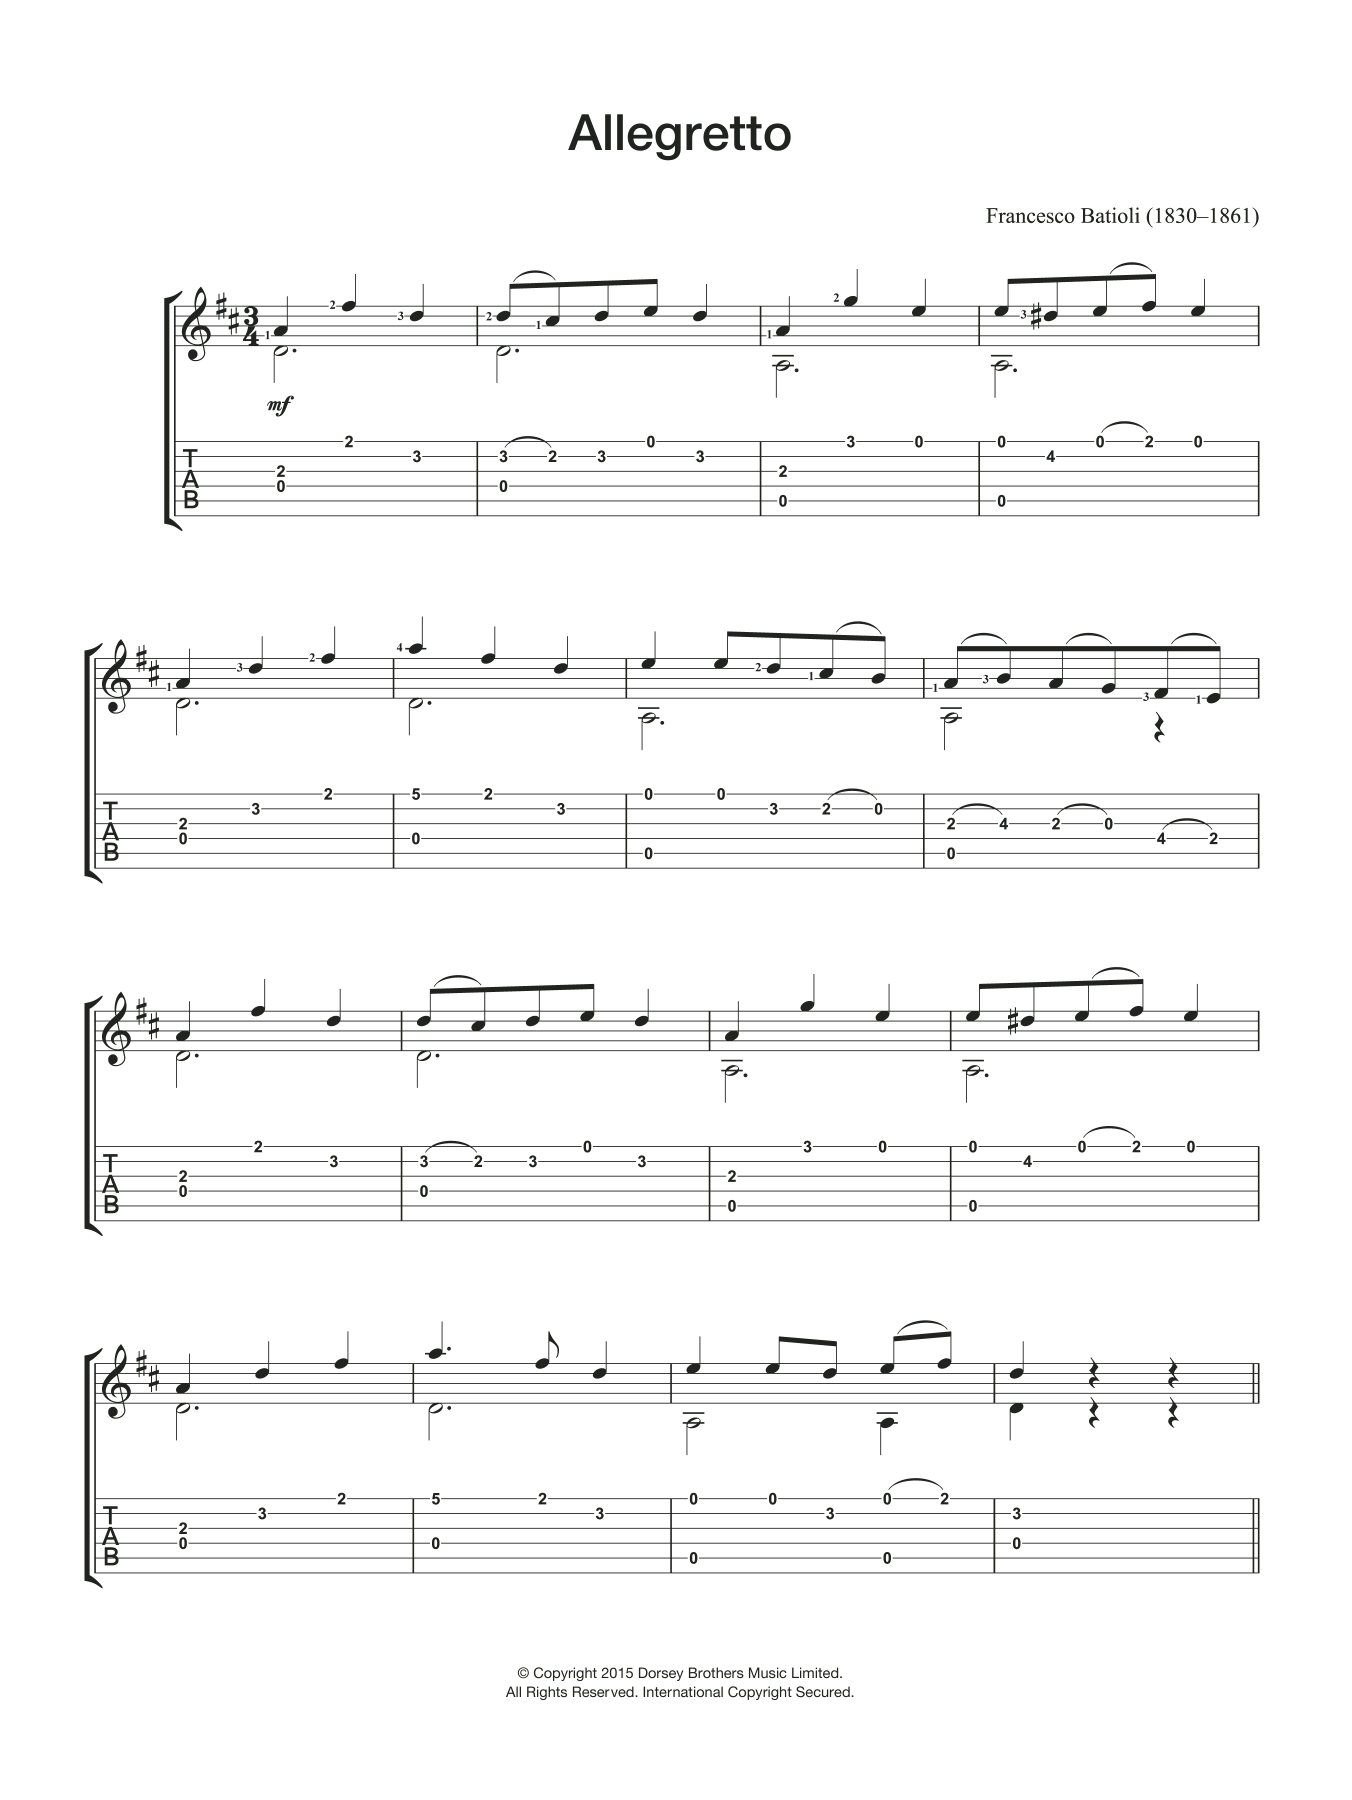 Francesco Batioli Allegretto sheet music notes and chords arranged for Easy Guitar